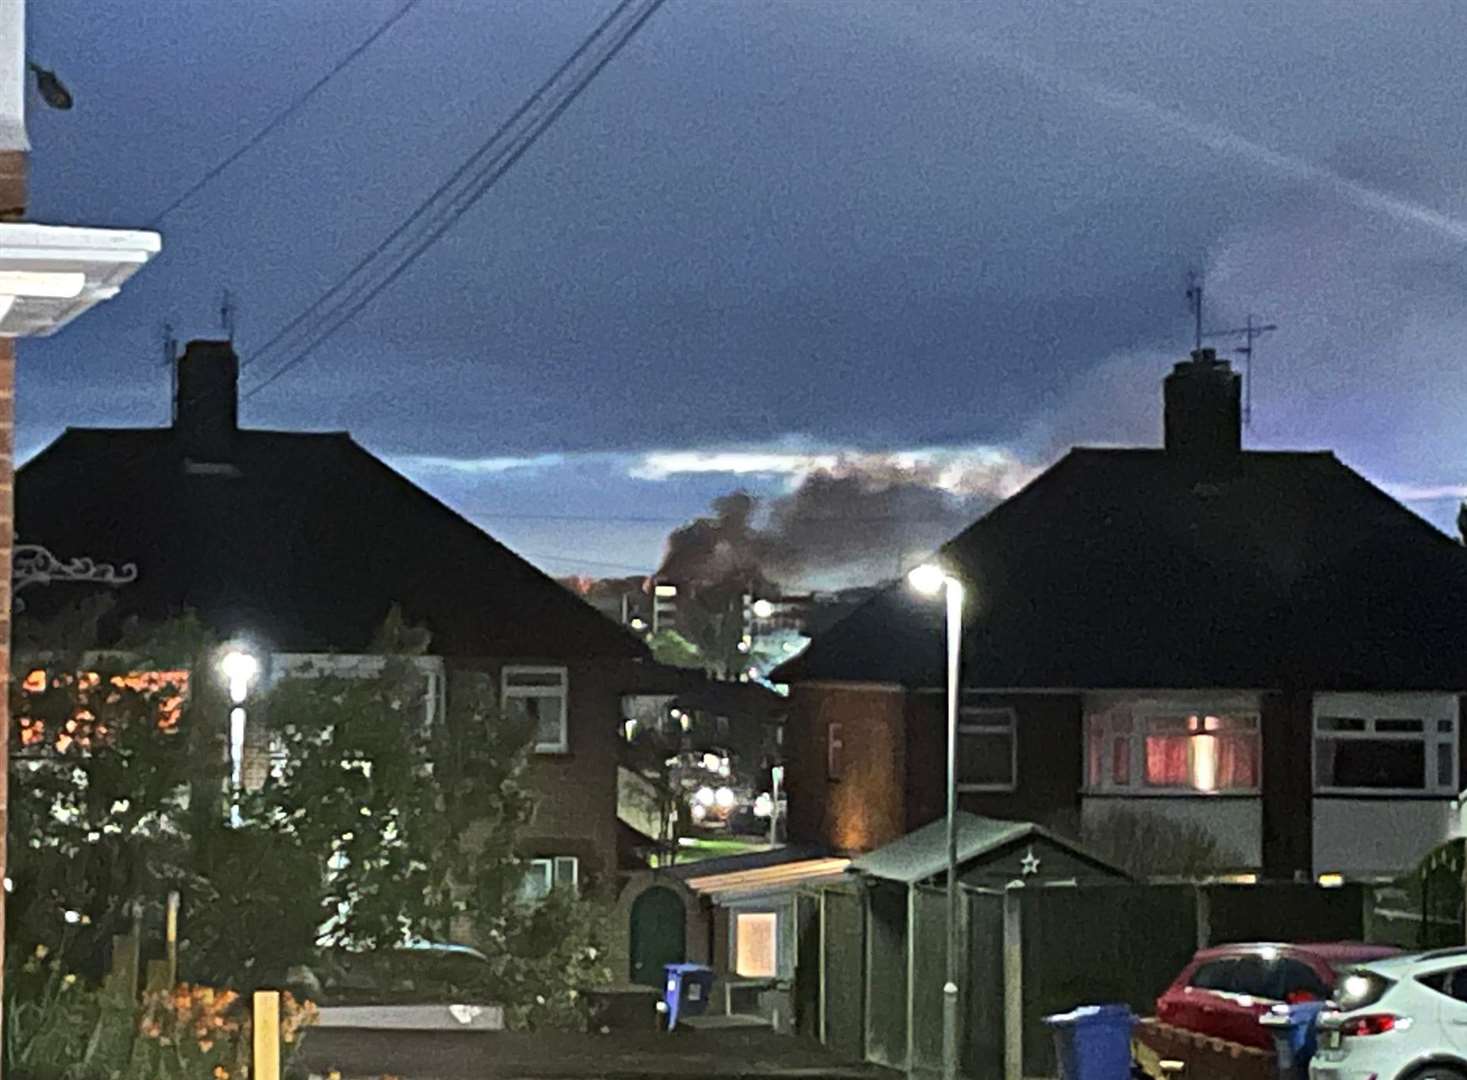 Pictures show “massive” blaze near Sittingbourne town centre